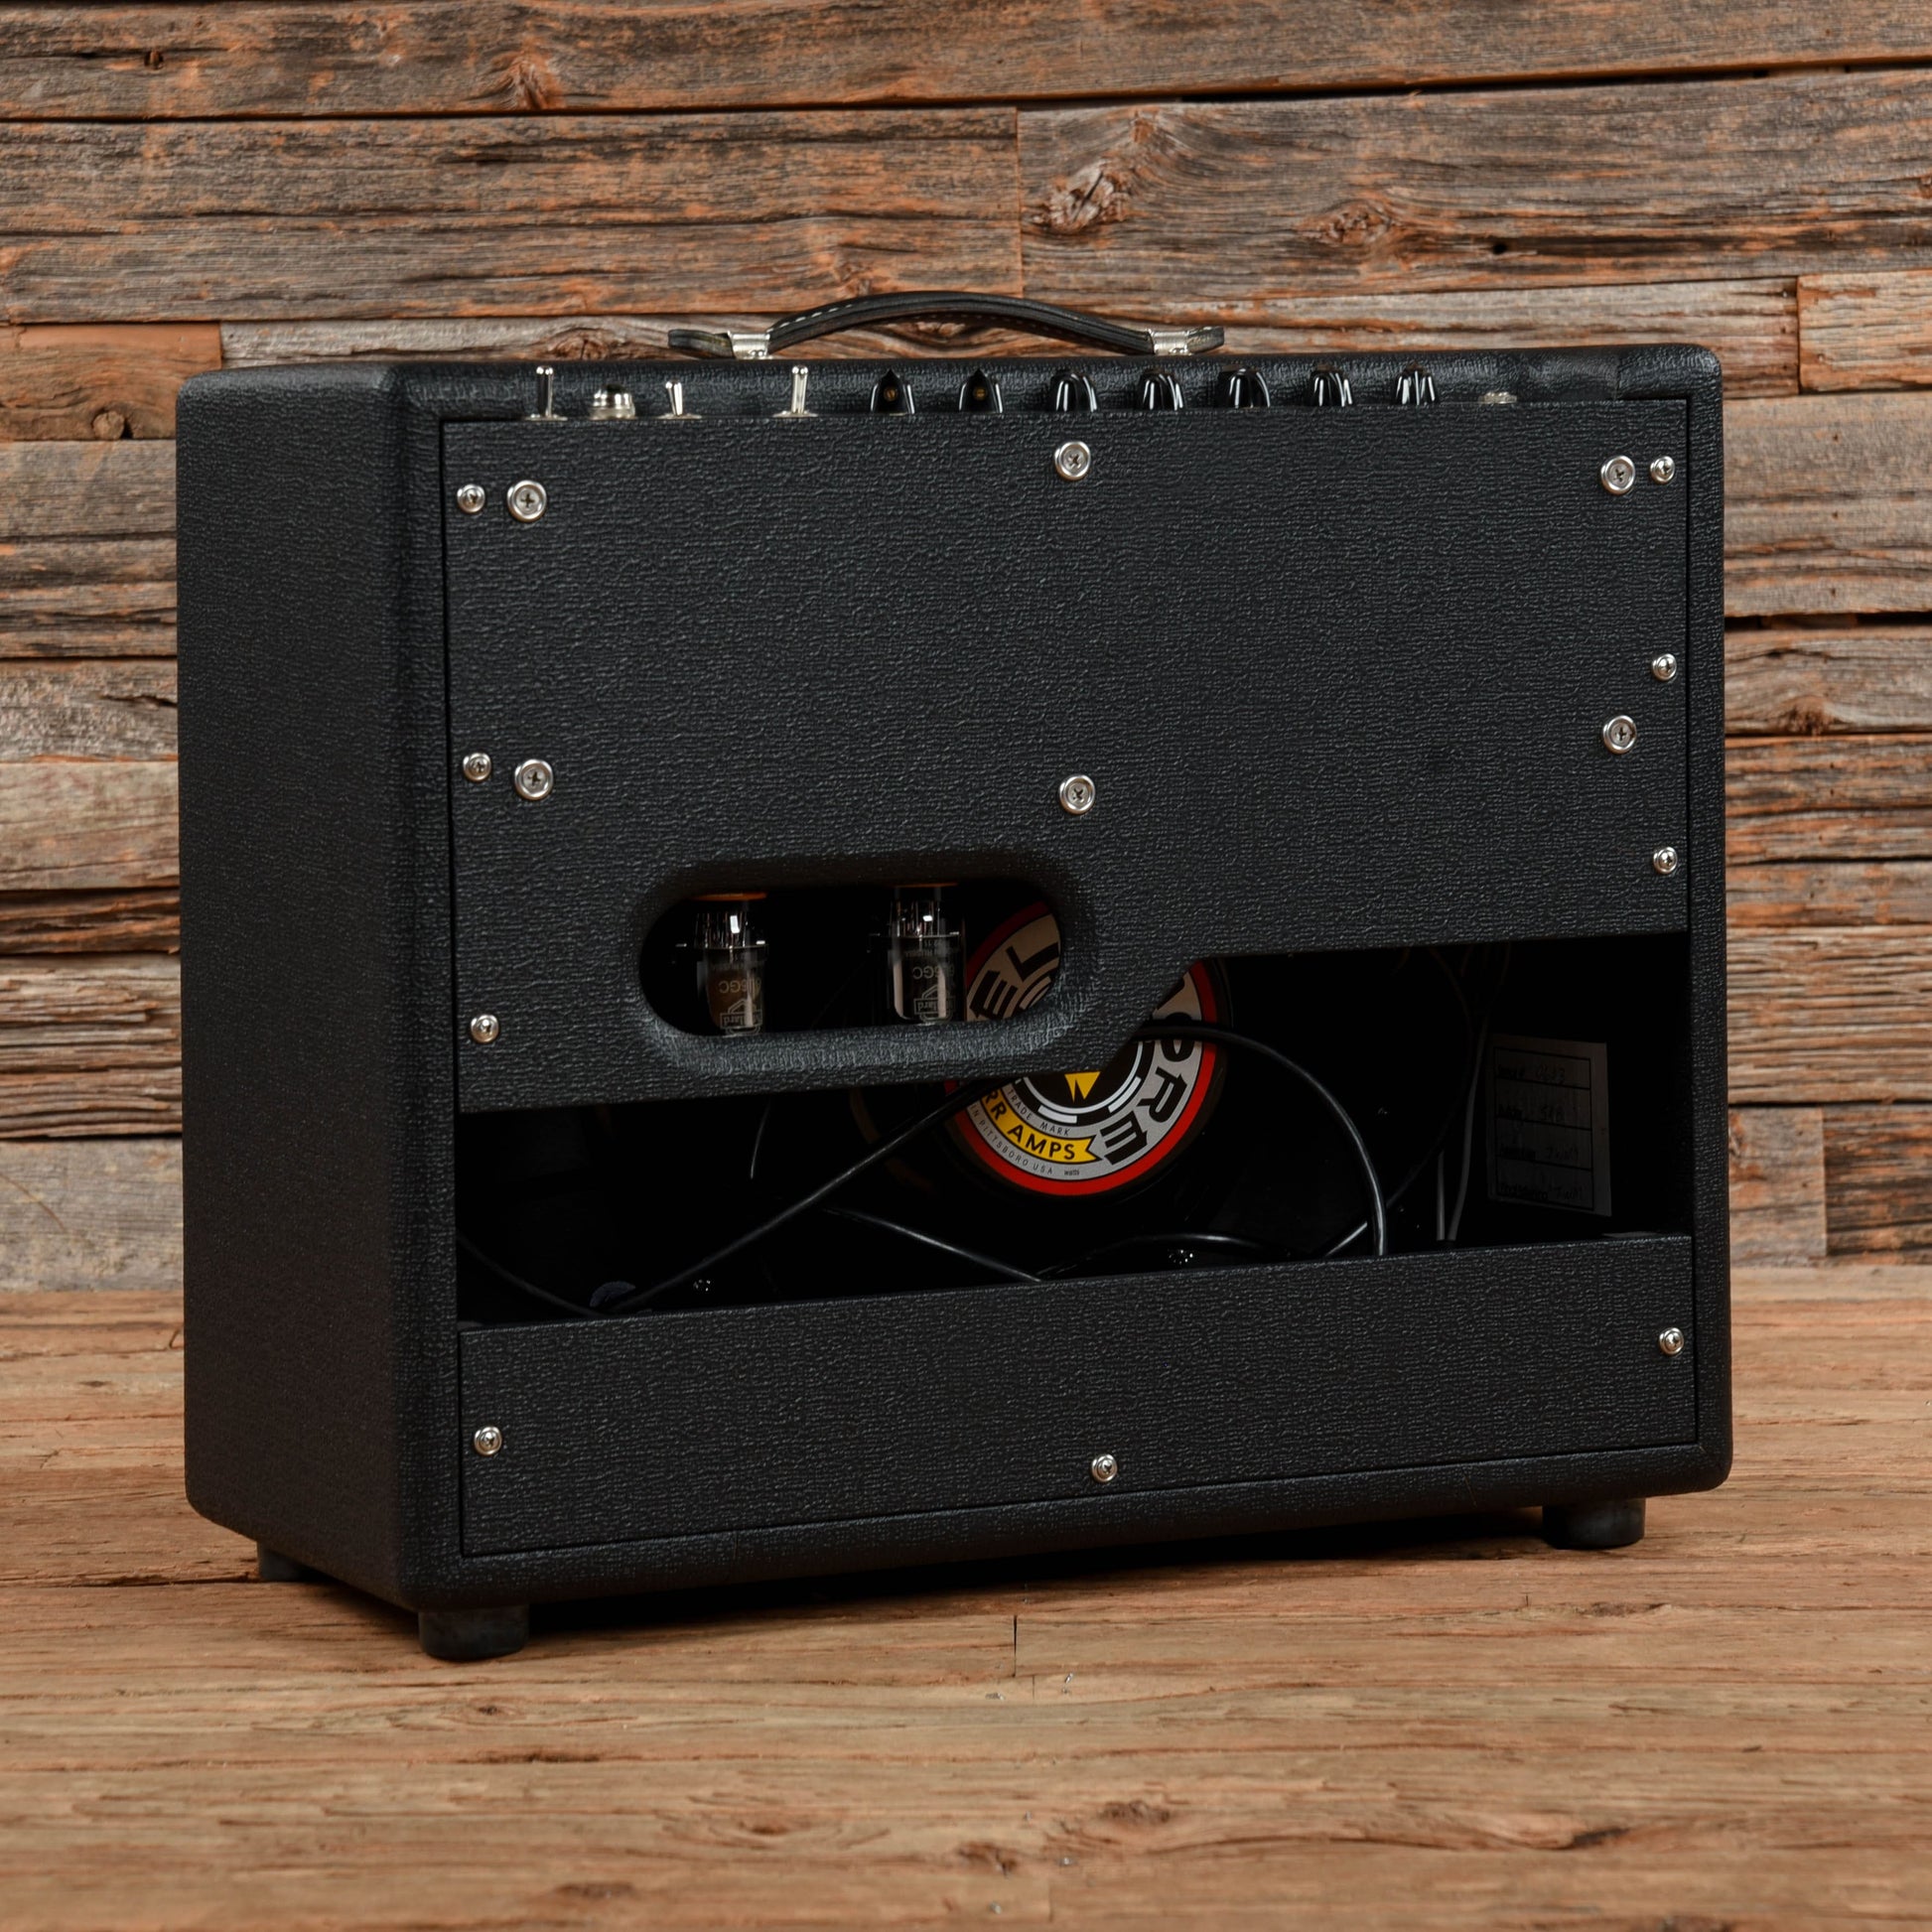 Carr Rambler 28-Watt 1x15" Guitar Combo Amps / Guitar Cabinets